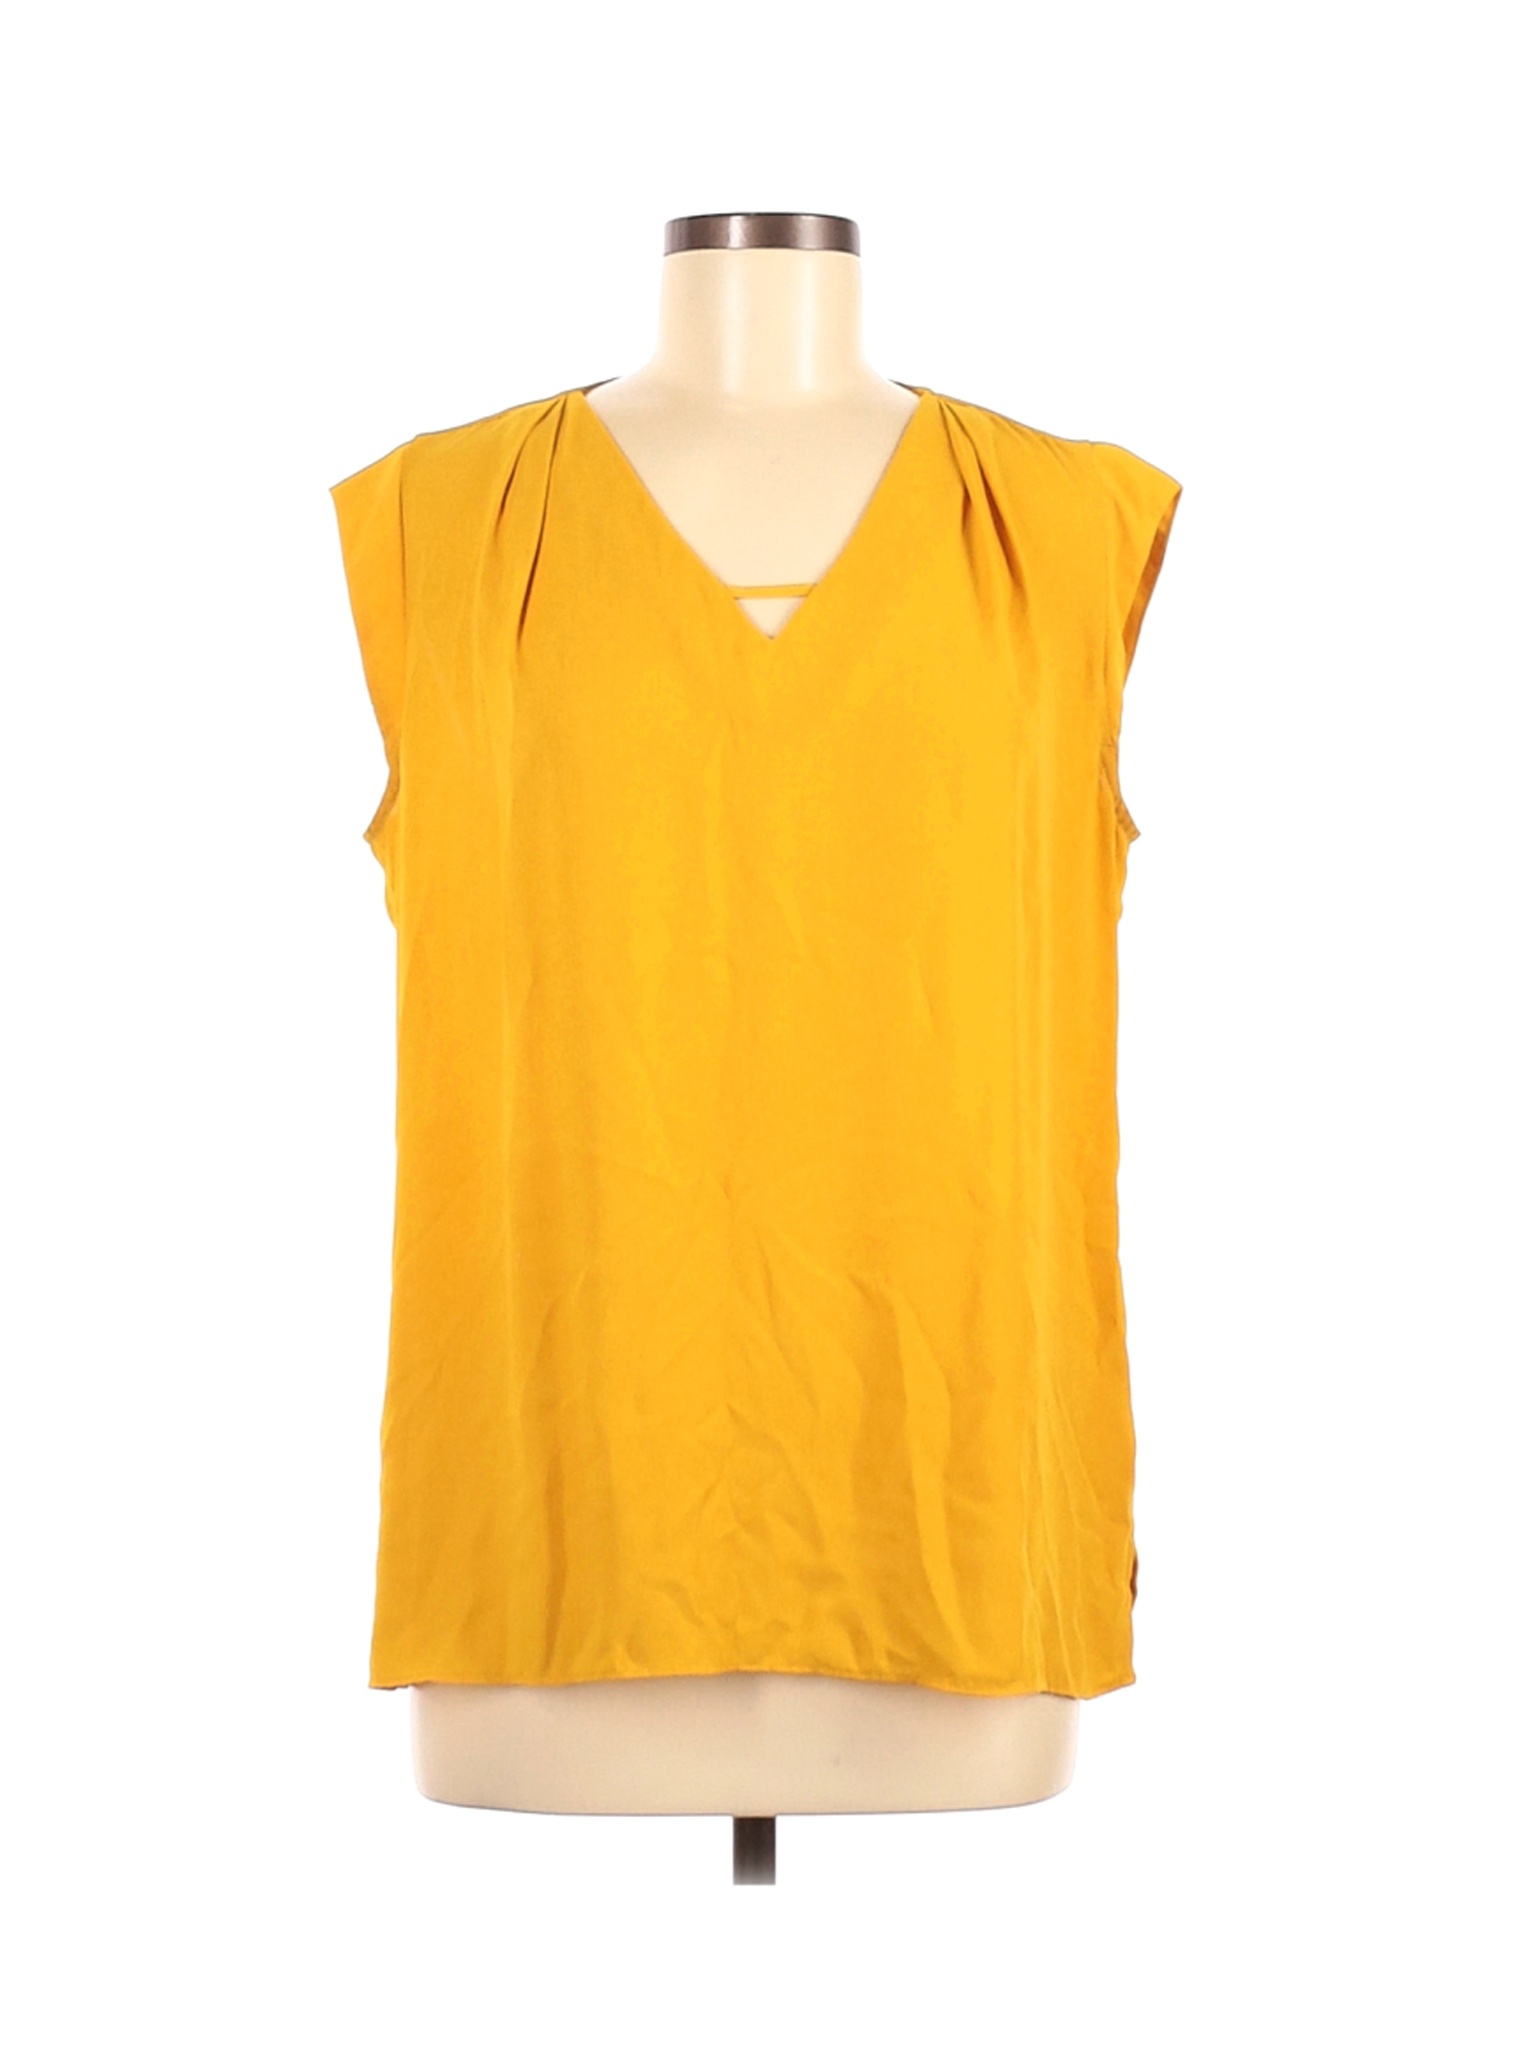 Banana Republic Factory Store Women Yellow Sleeveless Blouse M | eBay